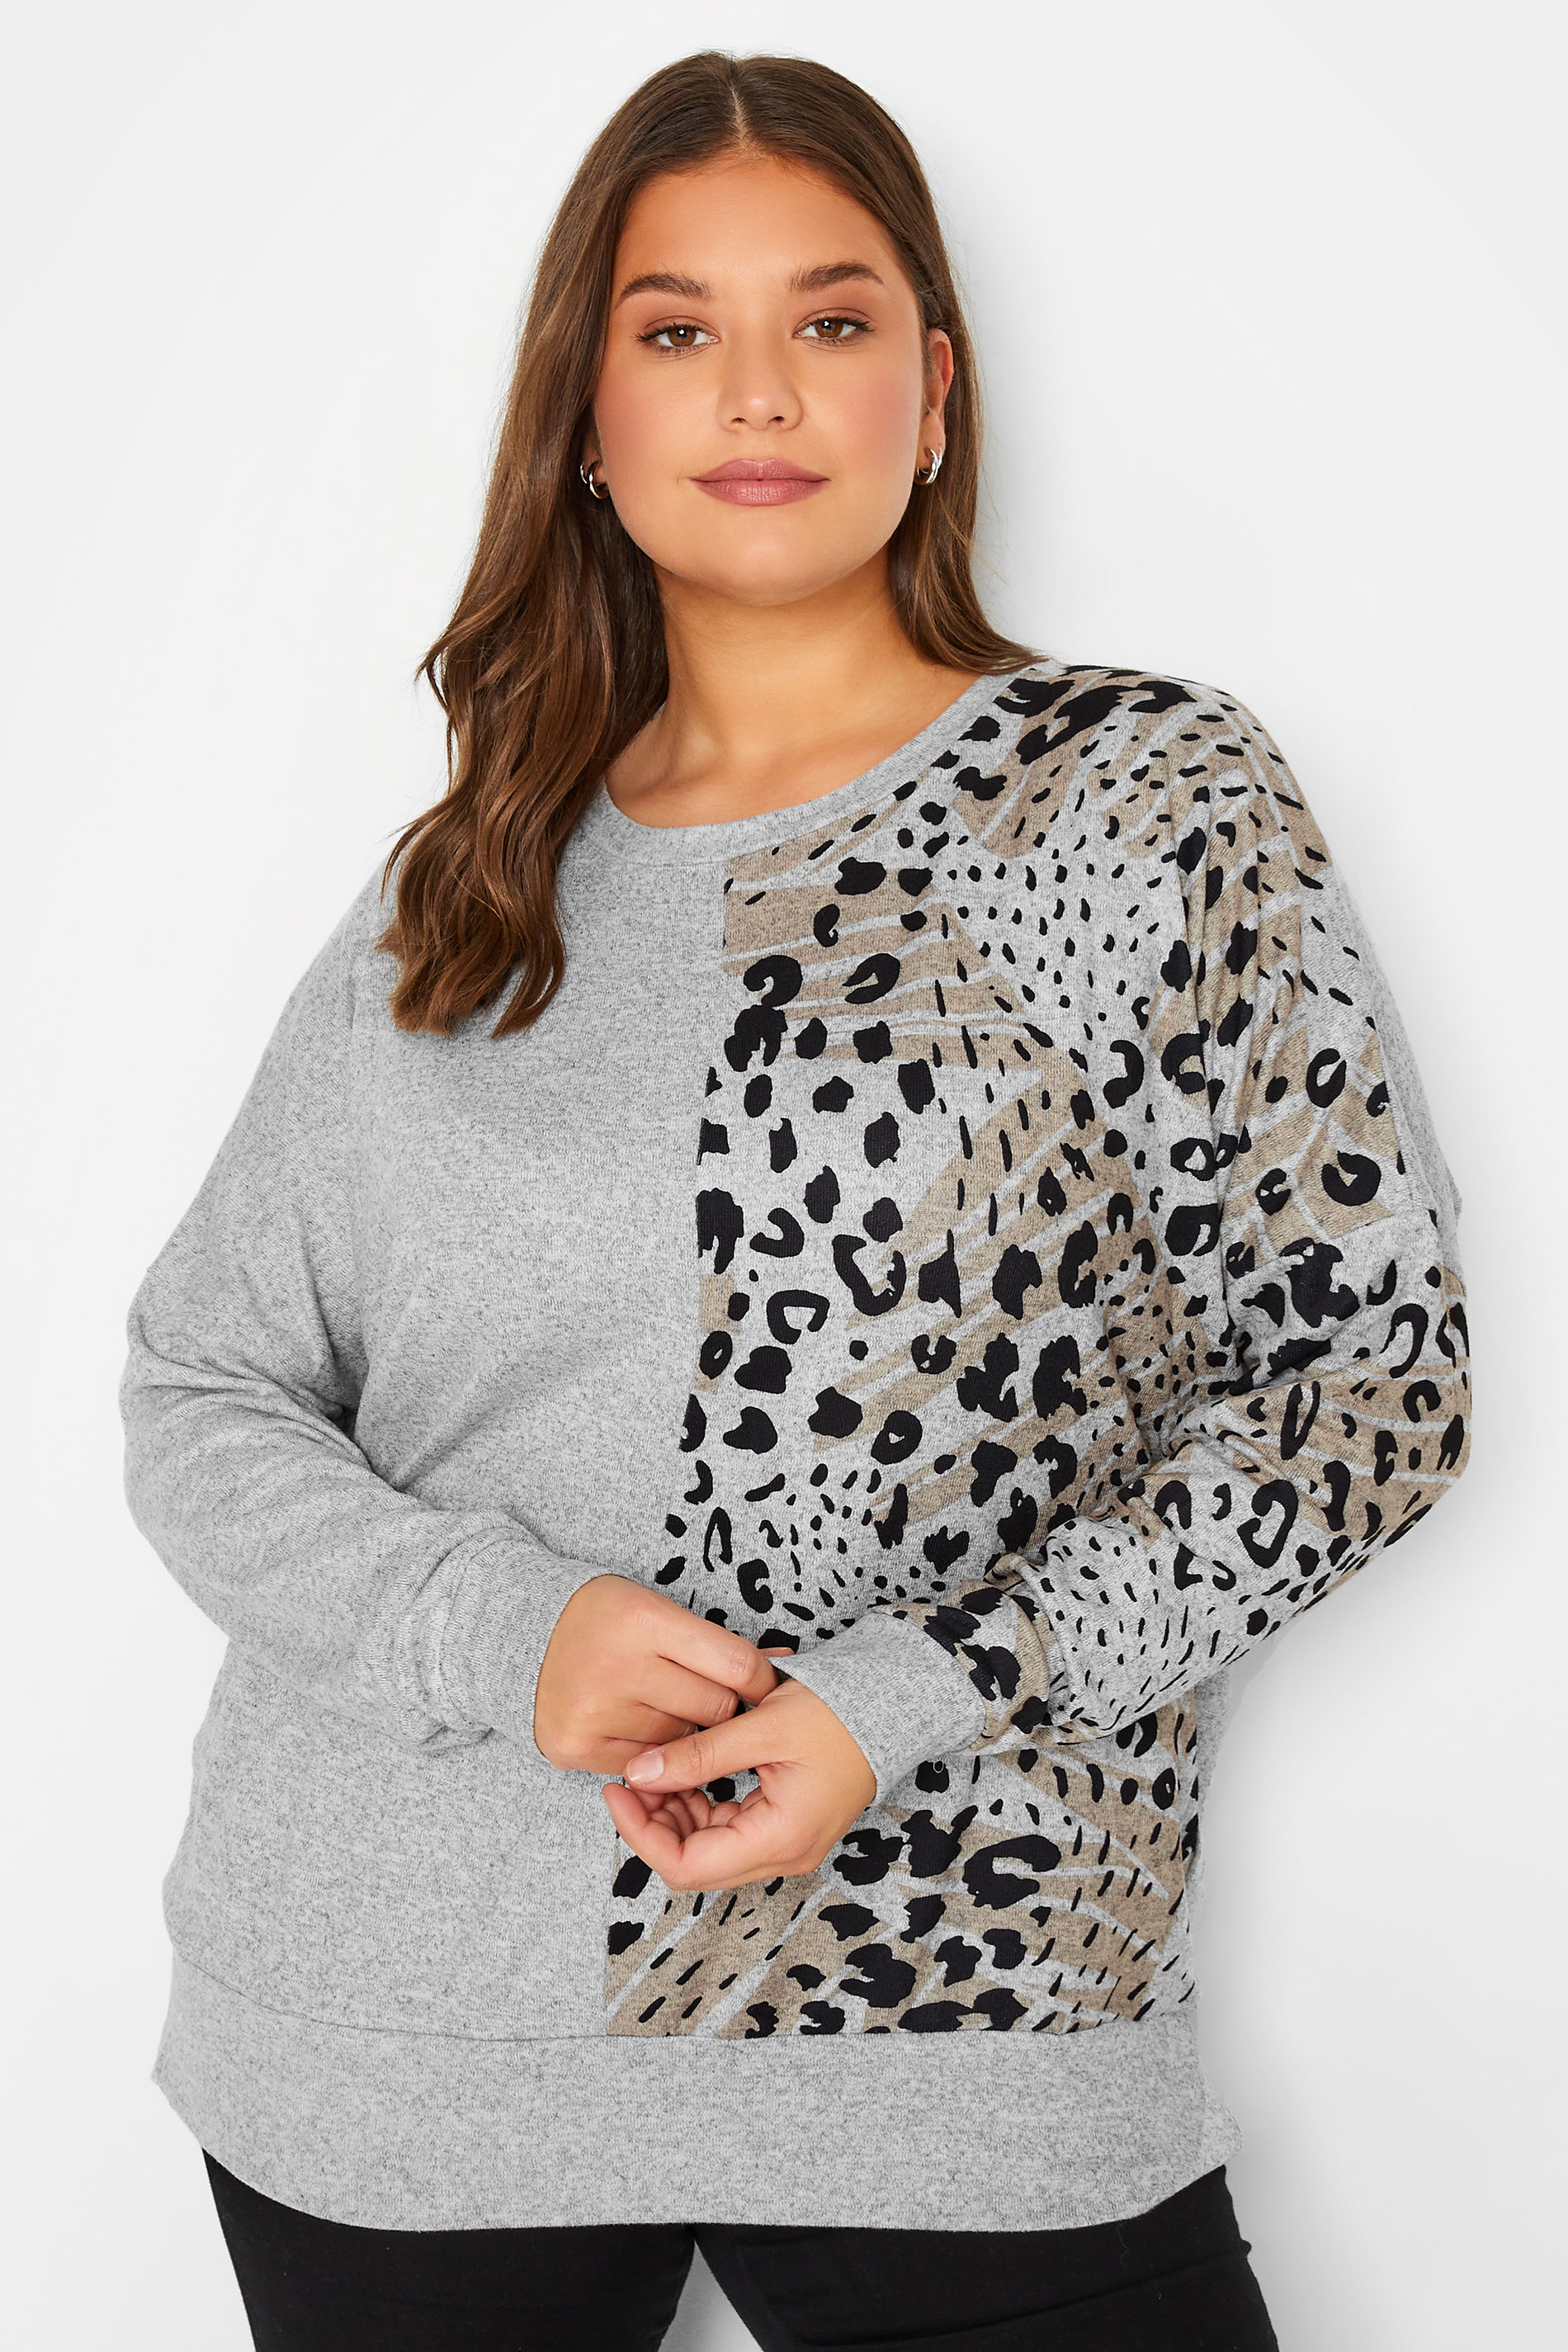 LTS Tall Women's Grey Leopard Print Soft Touch Top | Long Tall Sally 1